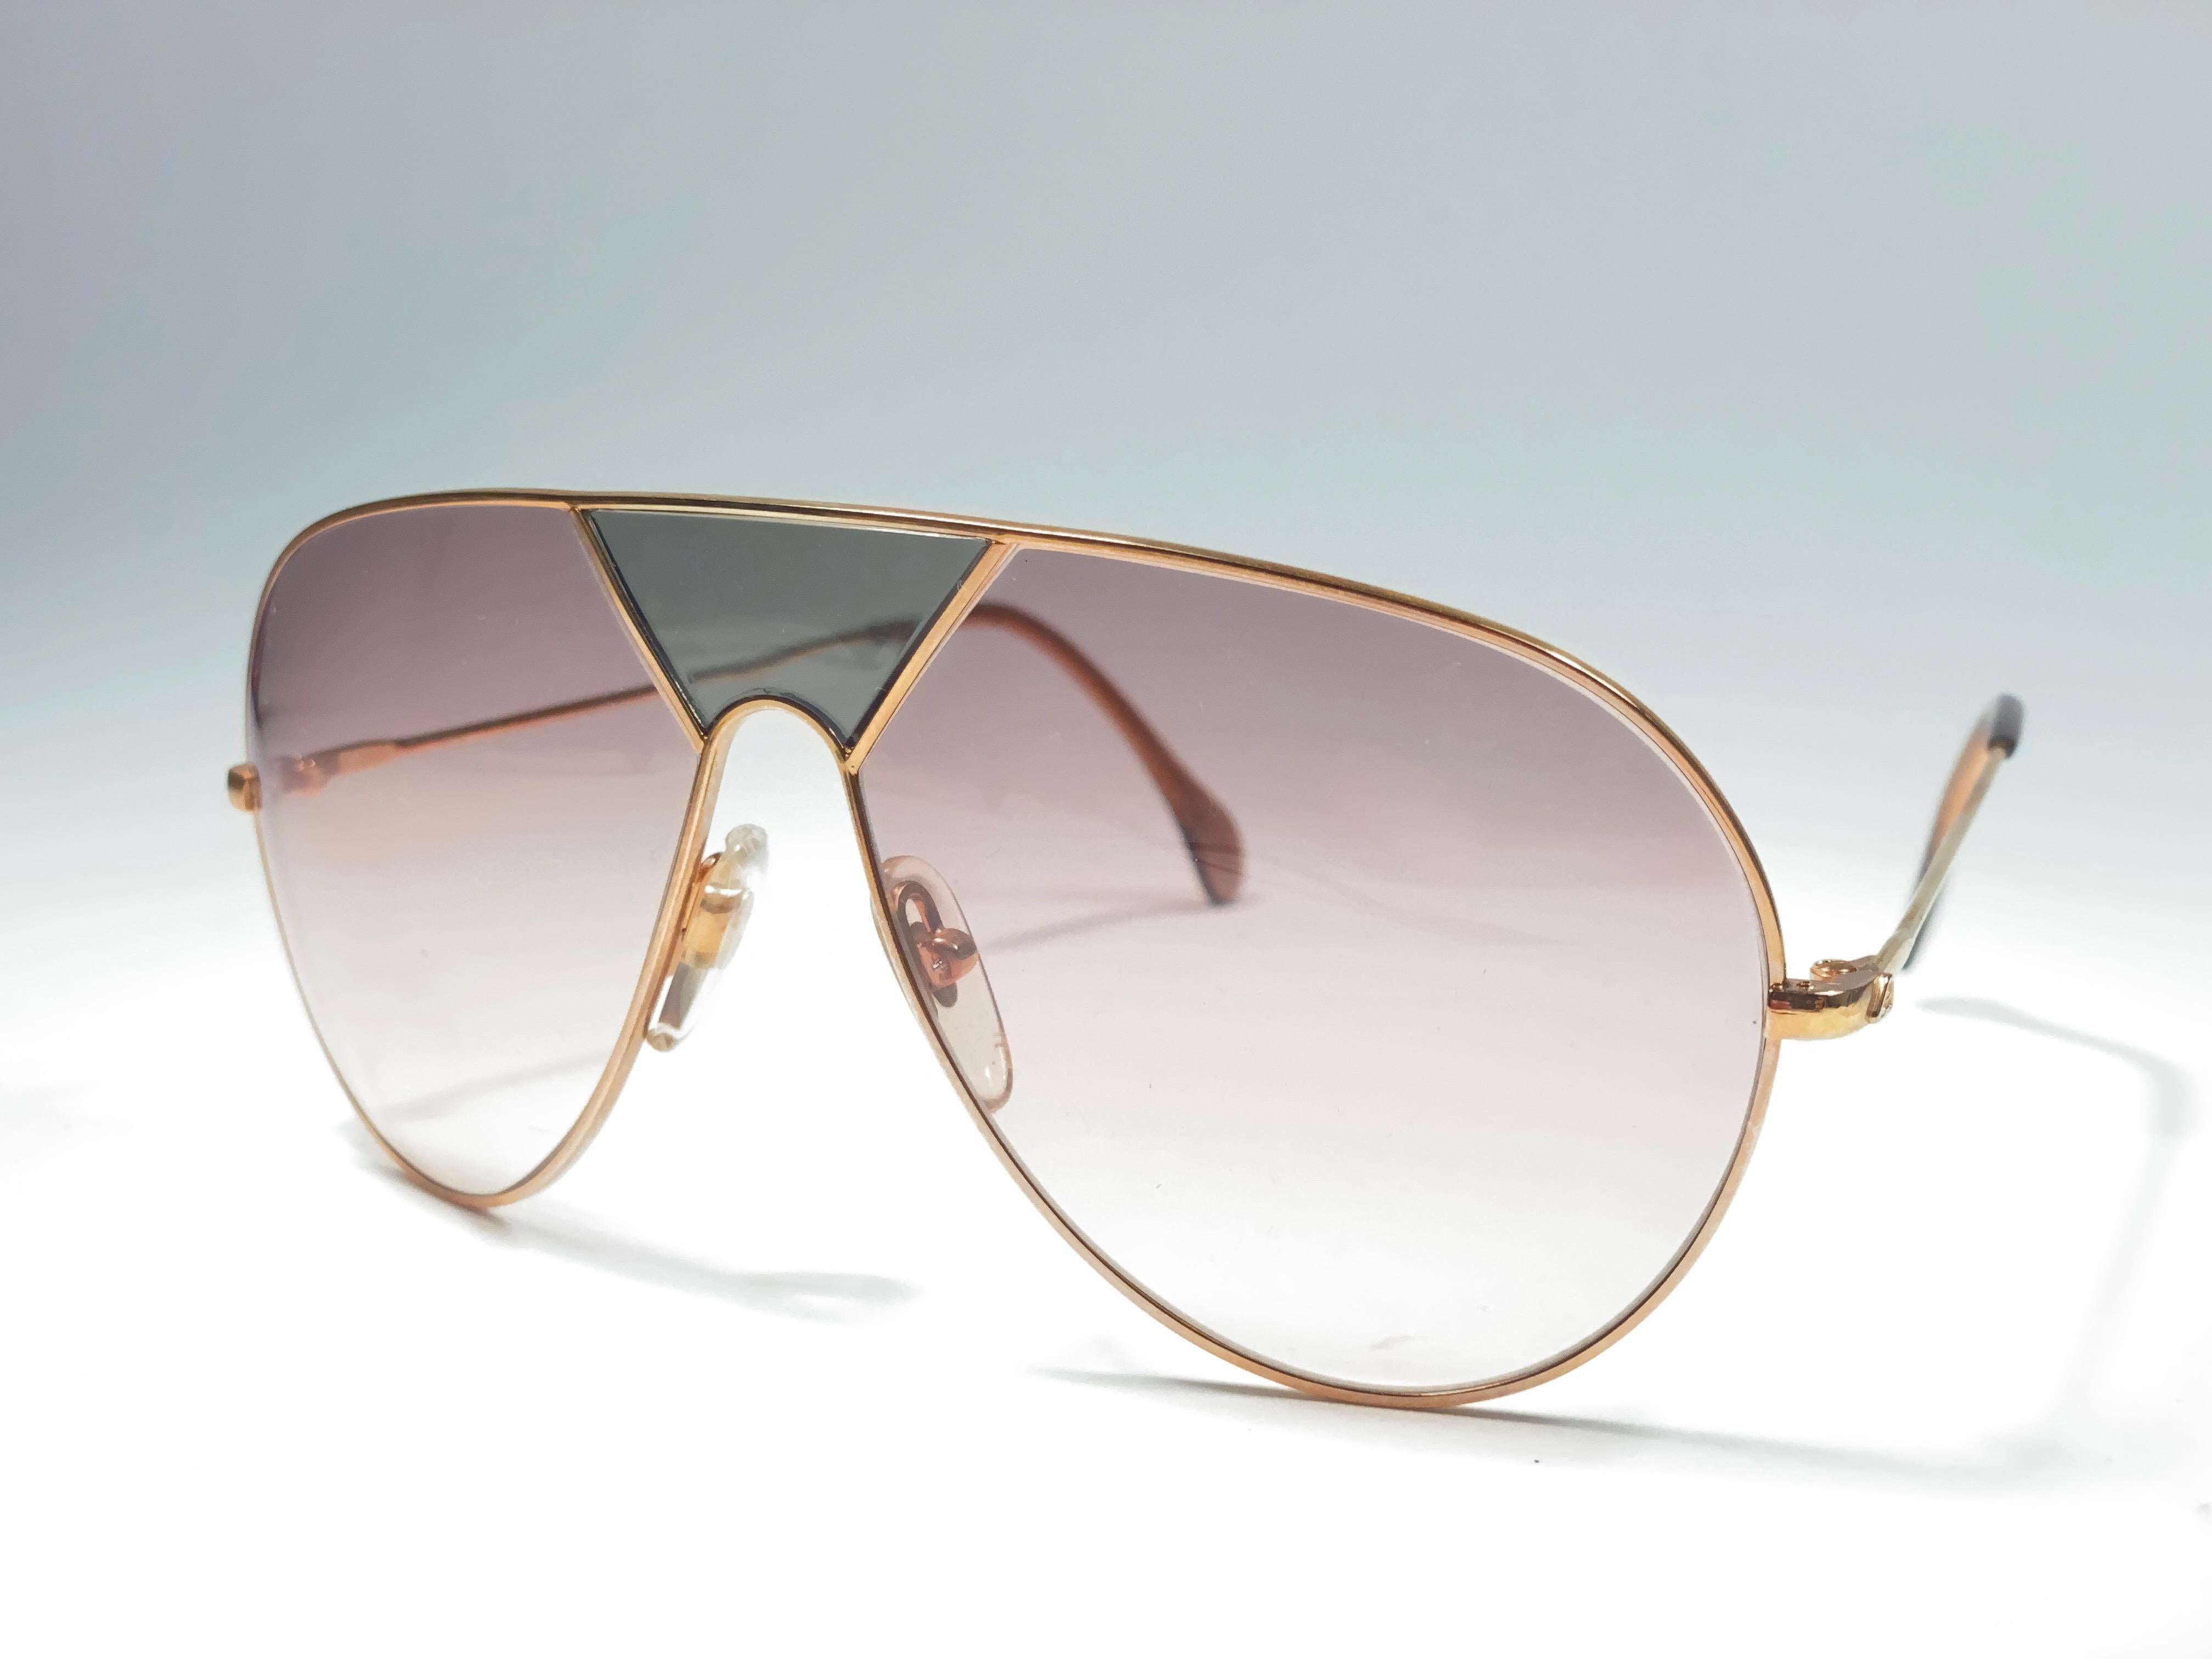 alpina sunglasses for sale